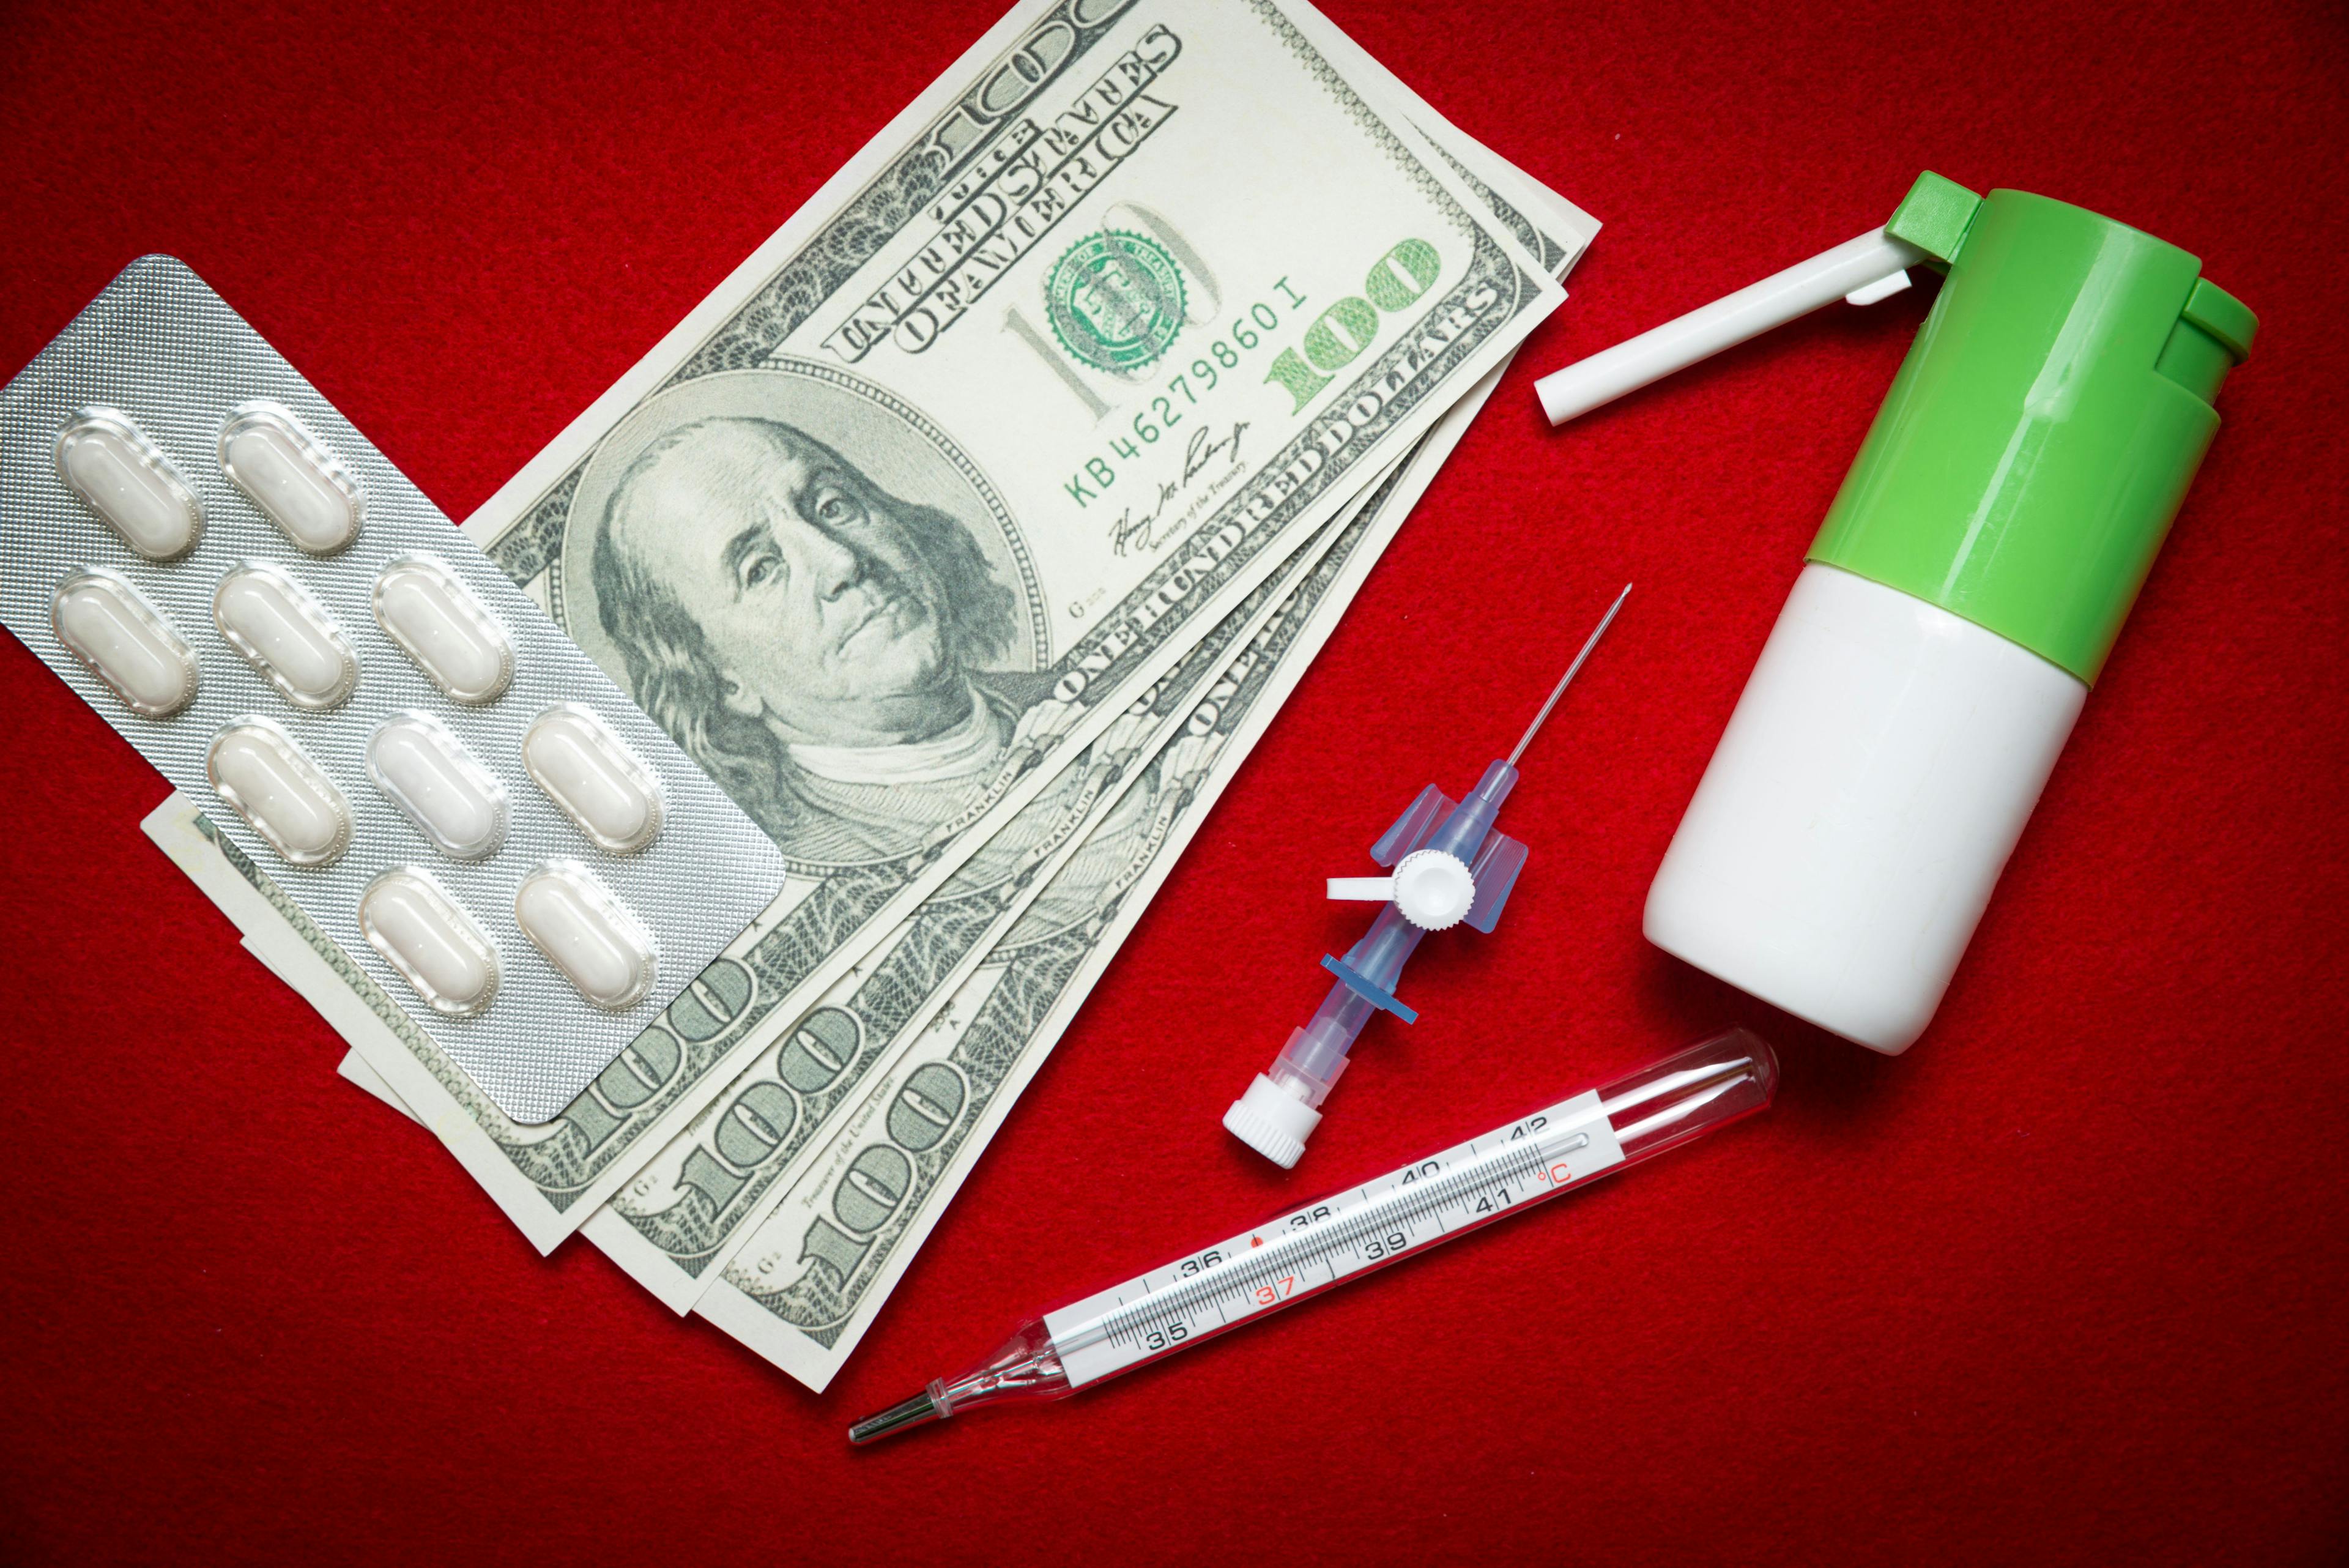 Pills, thermometer, inhaler and money | Image credit: Sebastian - stock.adobe.com